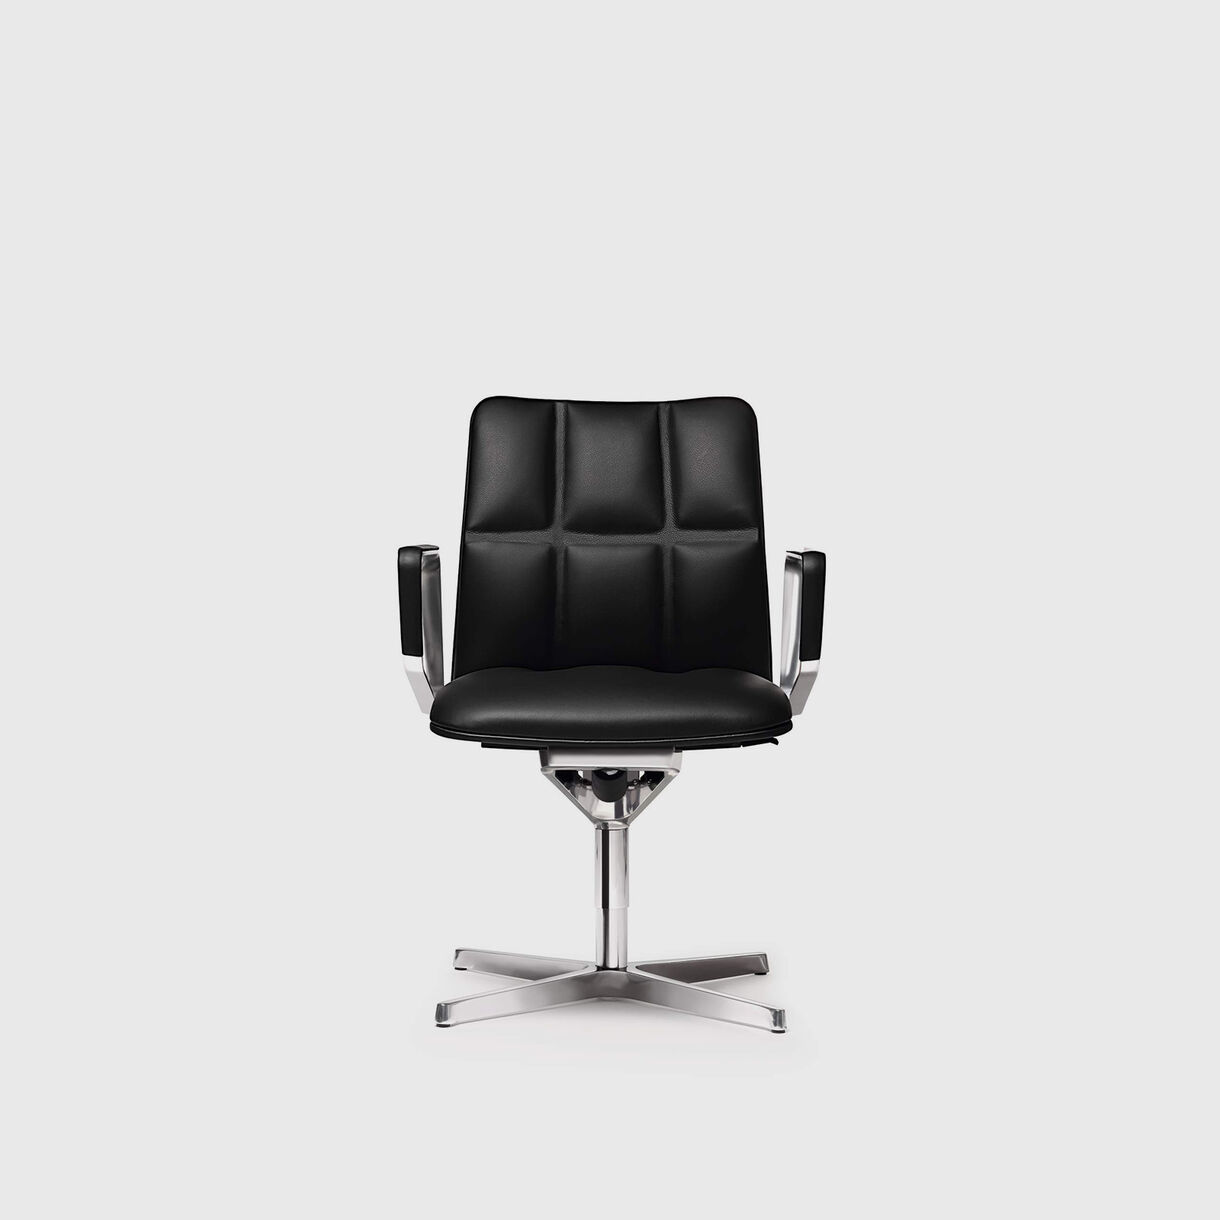 Leadchair Executive Swivel Chair, Low Back